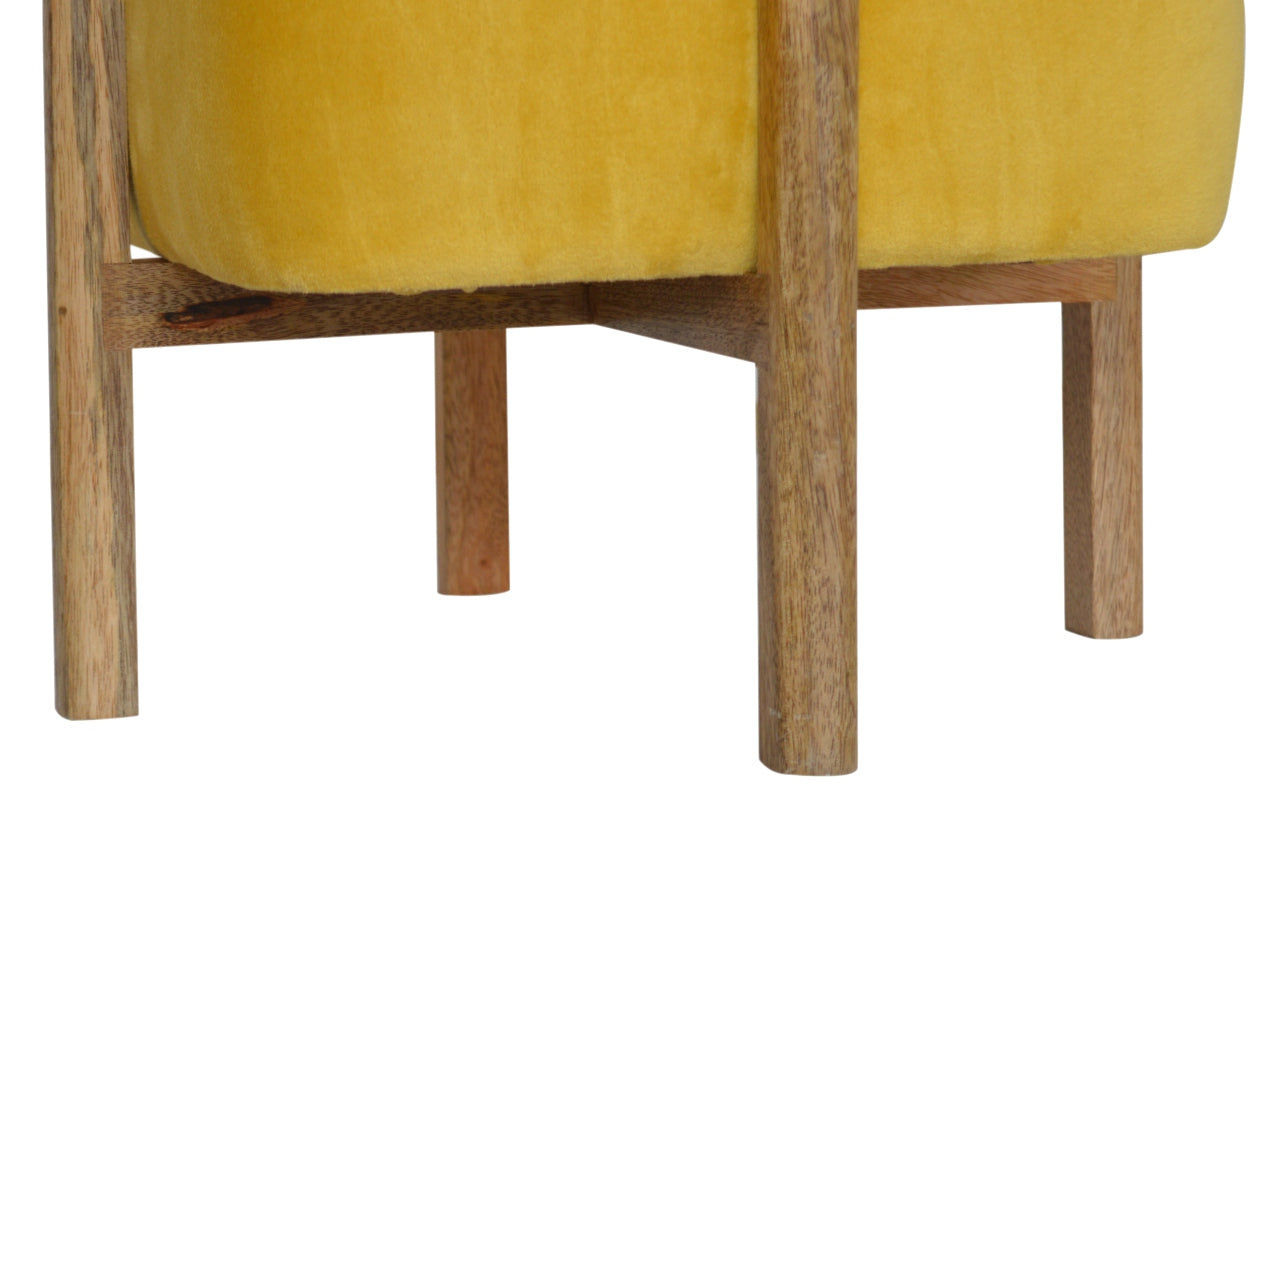 Mustard Velvet Footstool with Solid Wood Legs